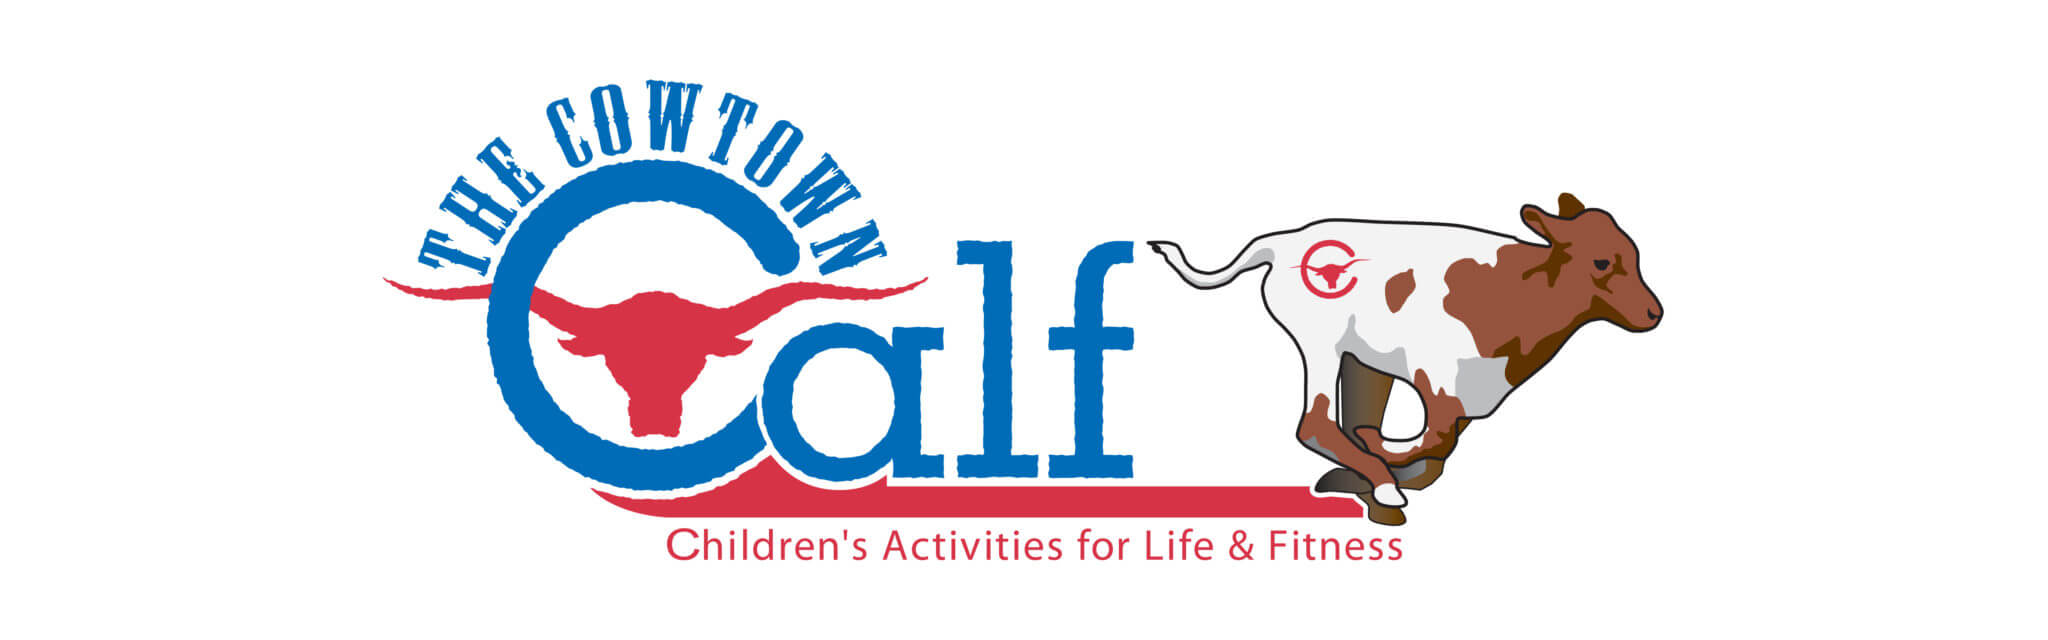 Cowtown CALF Program Logo